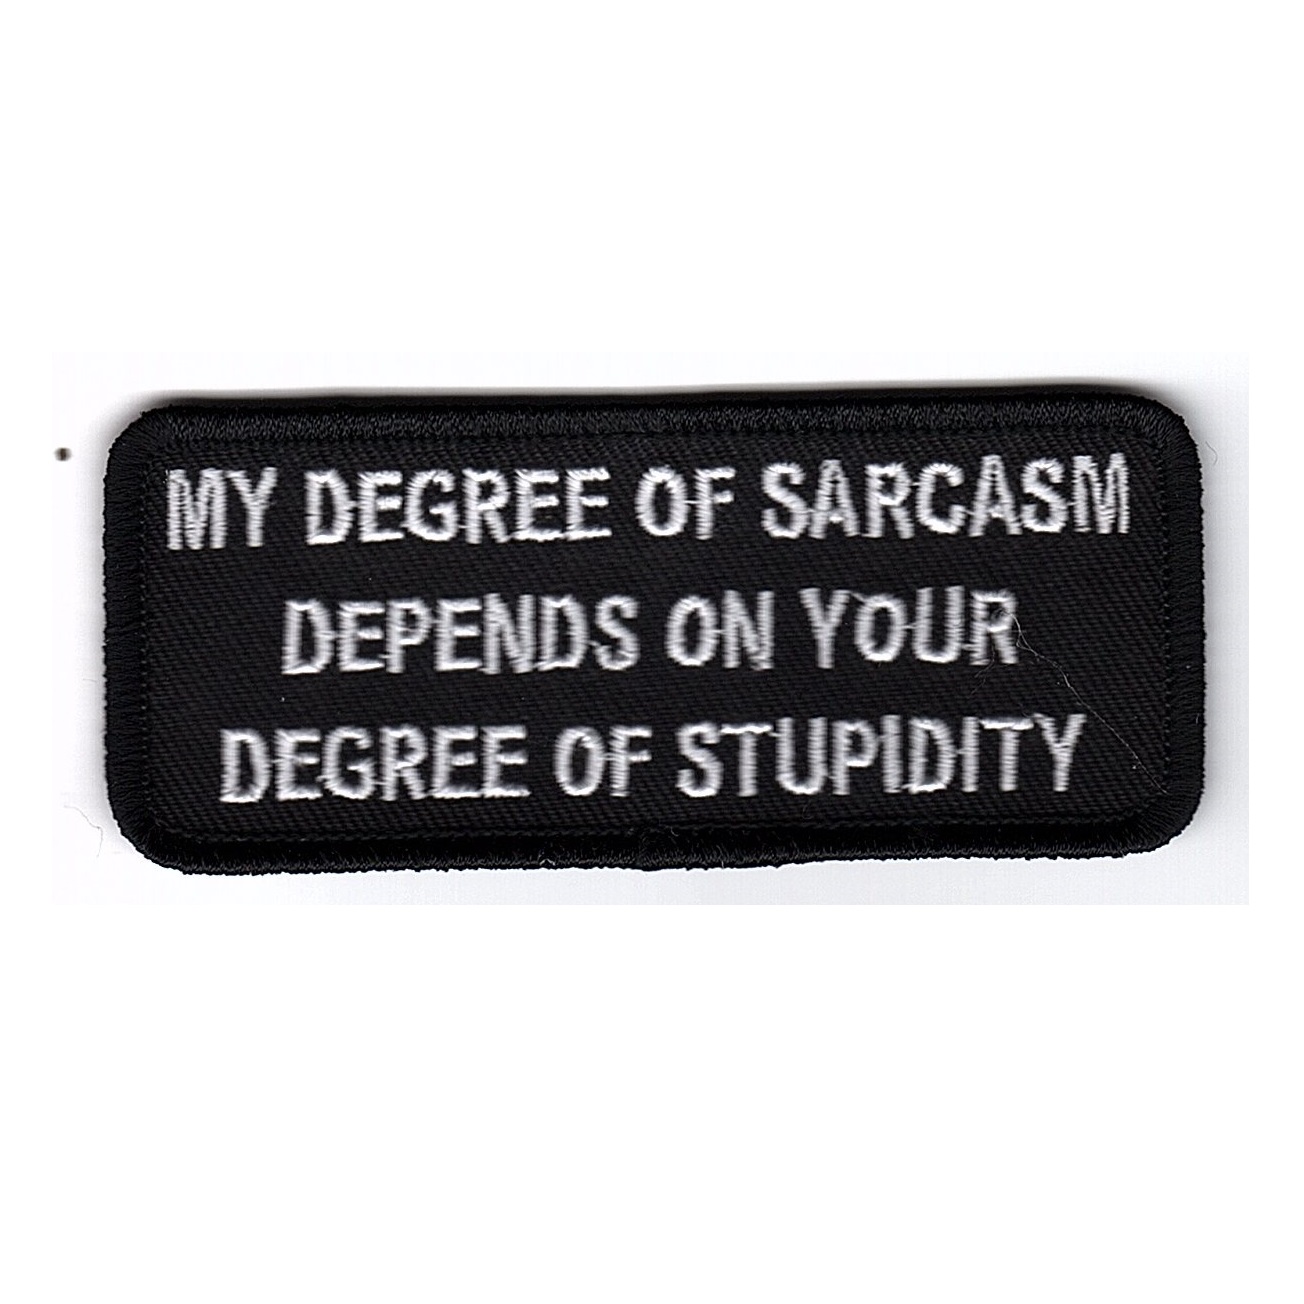 My degree of sarcasm